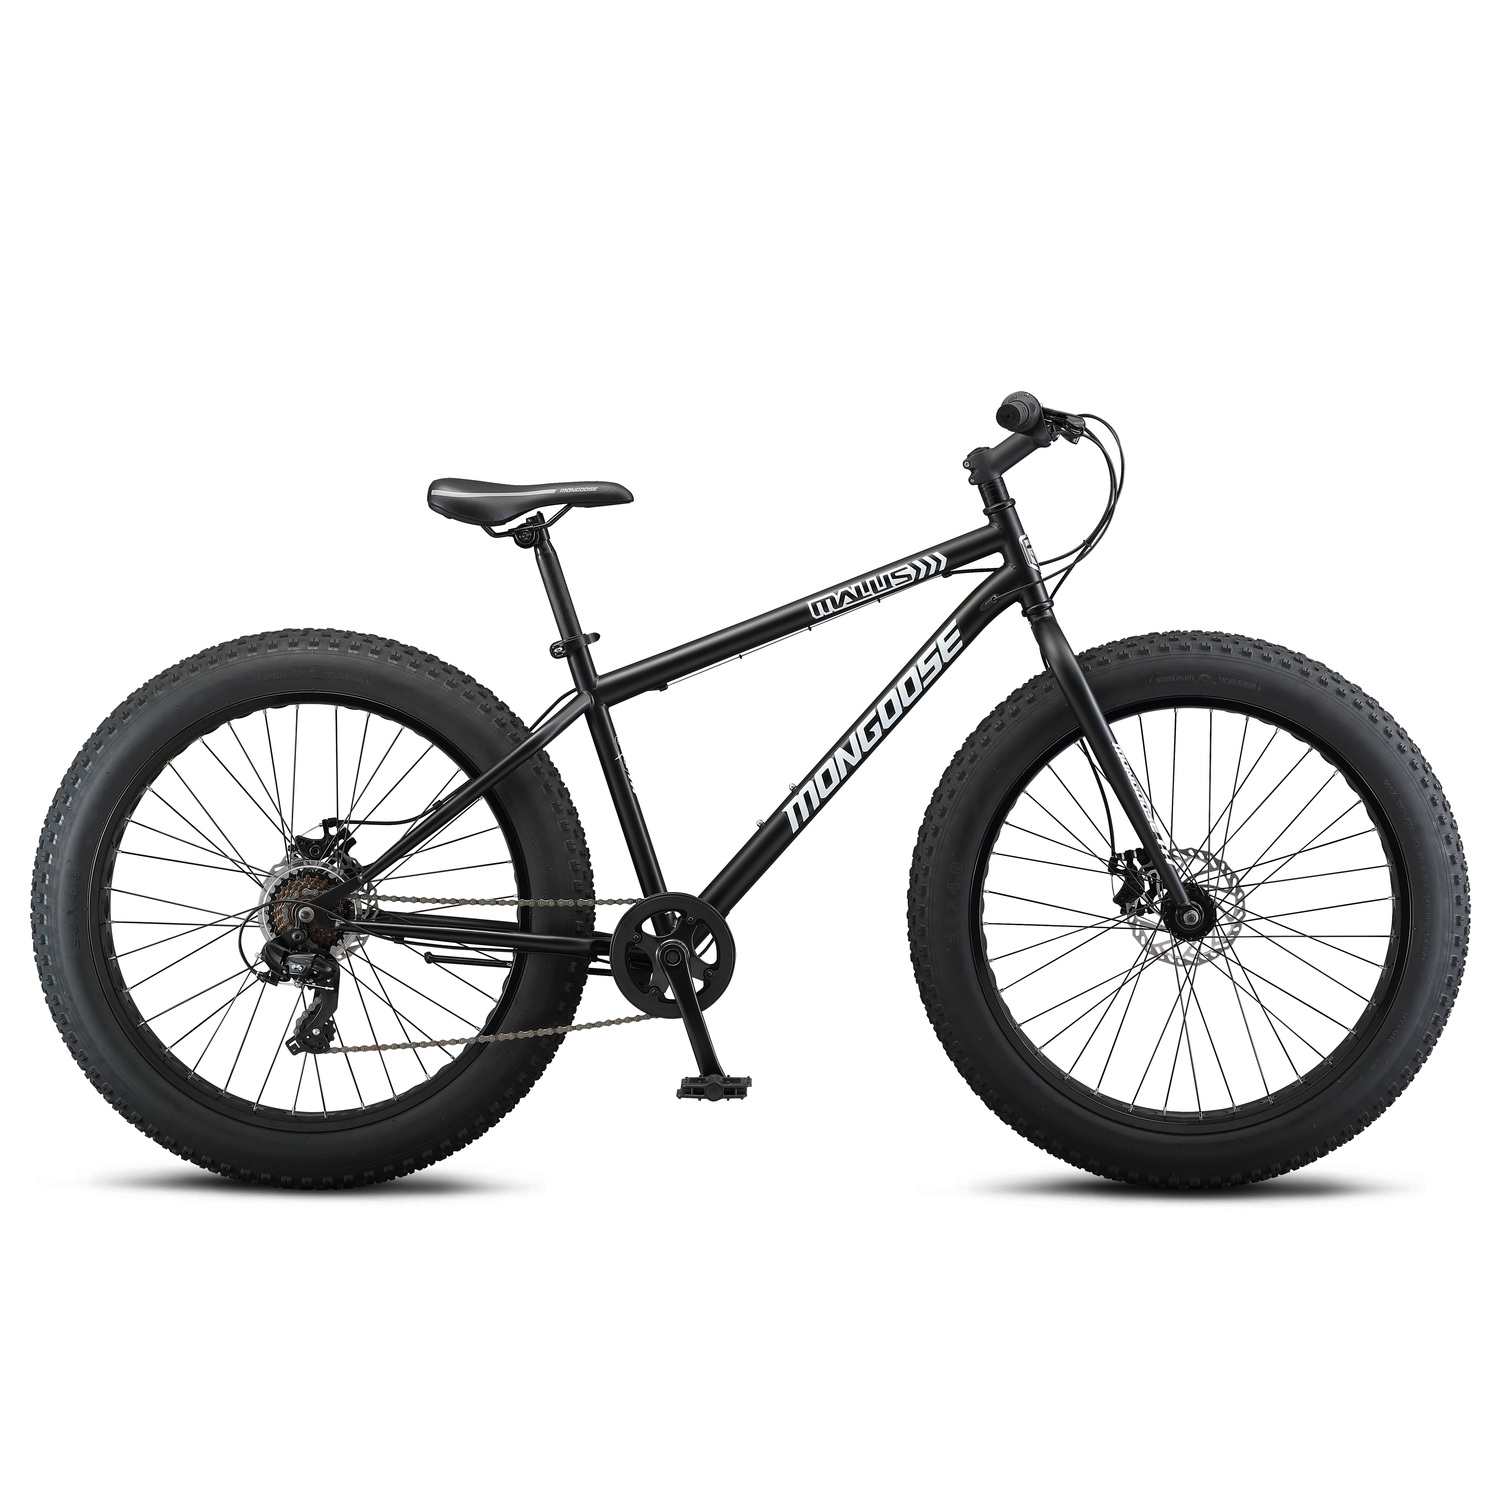 26" Mongoose Malus Adult Fat Tire Mountain Bike, Black - image 1 of 6